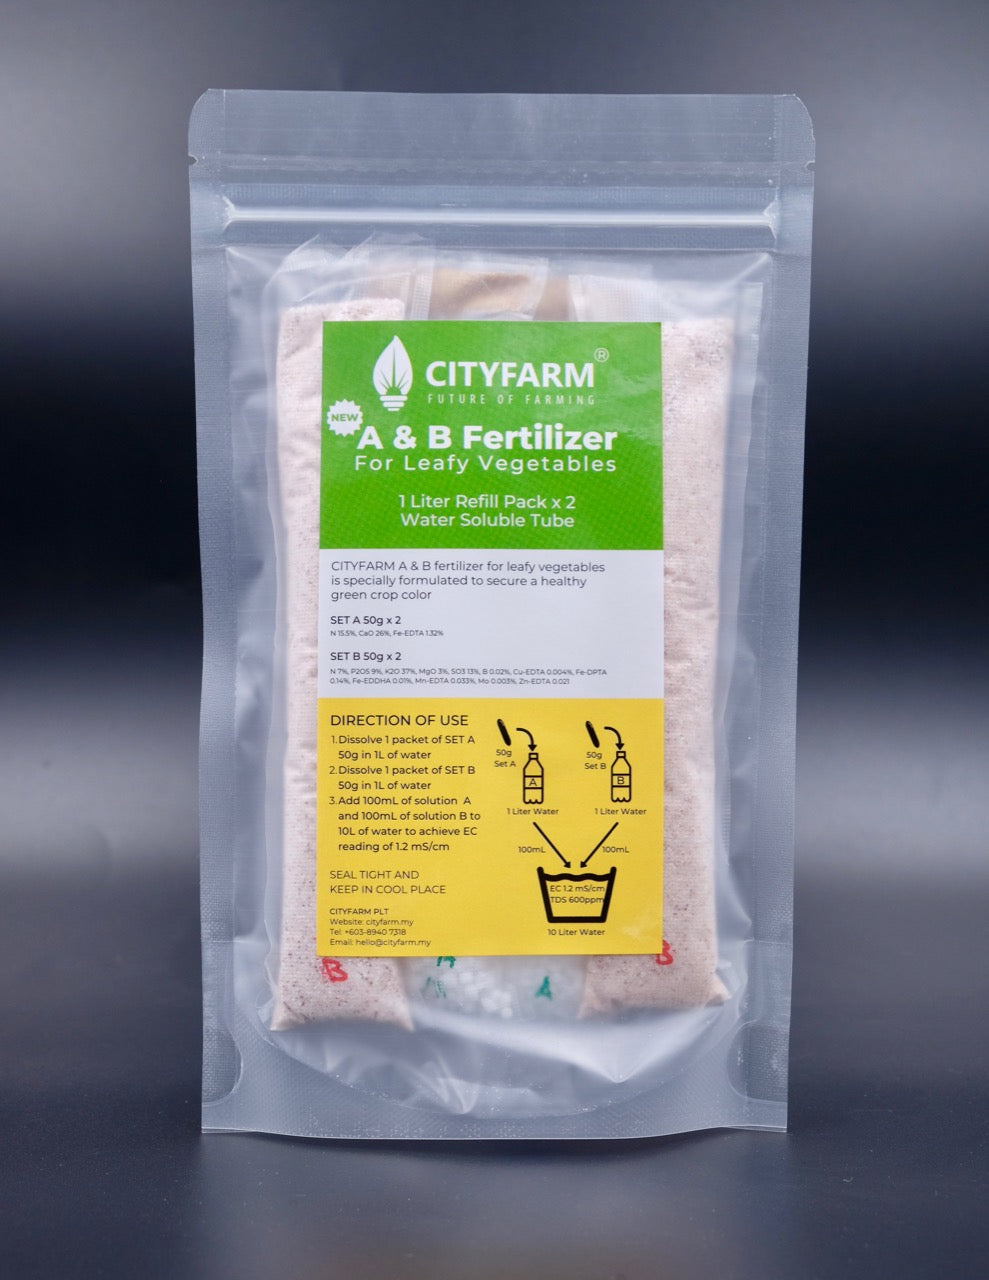 1 Liter Refill Pack Hydroponic A & B Fertilizer For Leafy Greens (Pack of 2 sets) - CityFarm